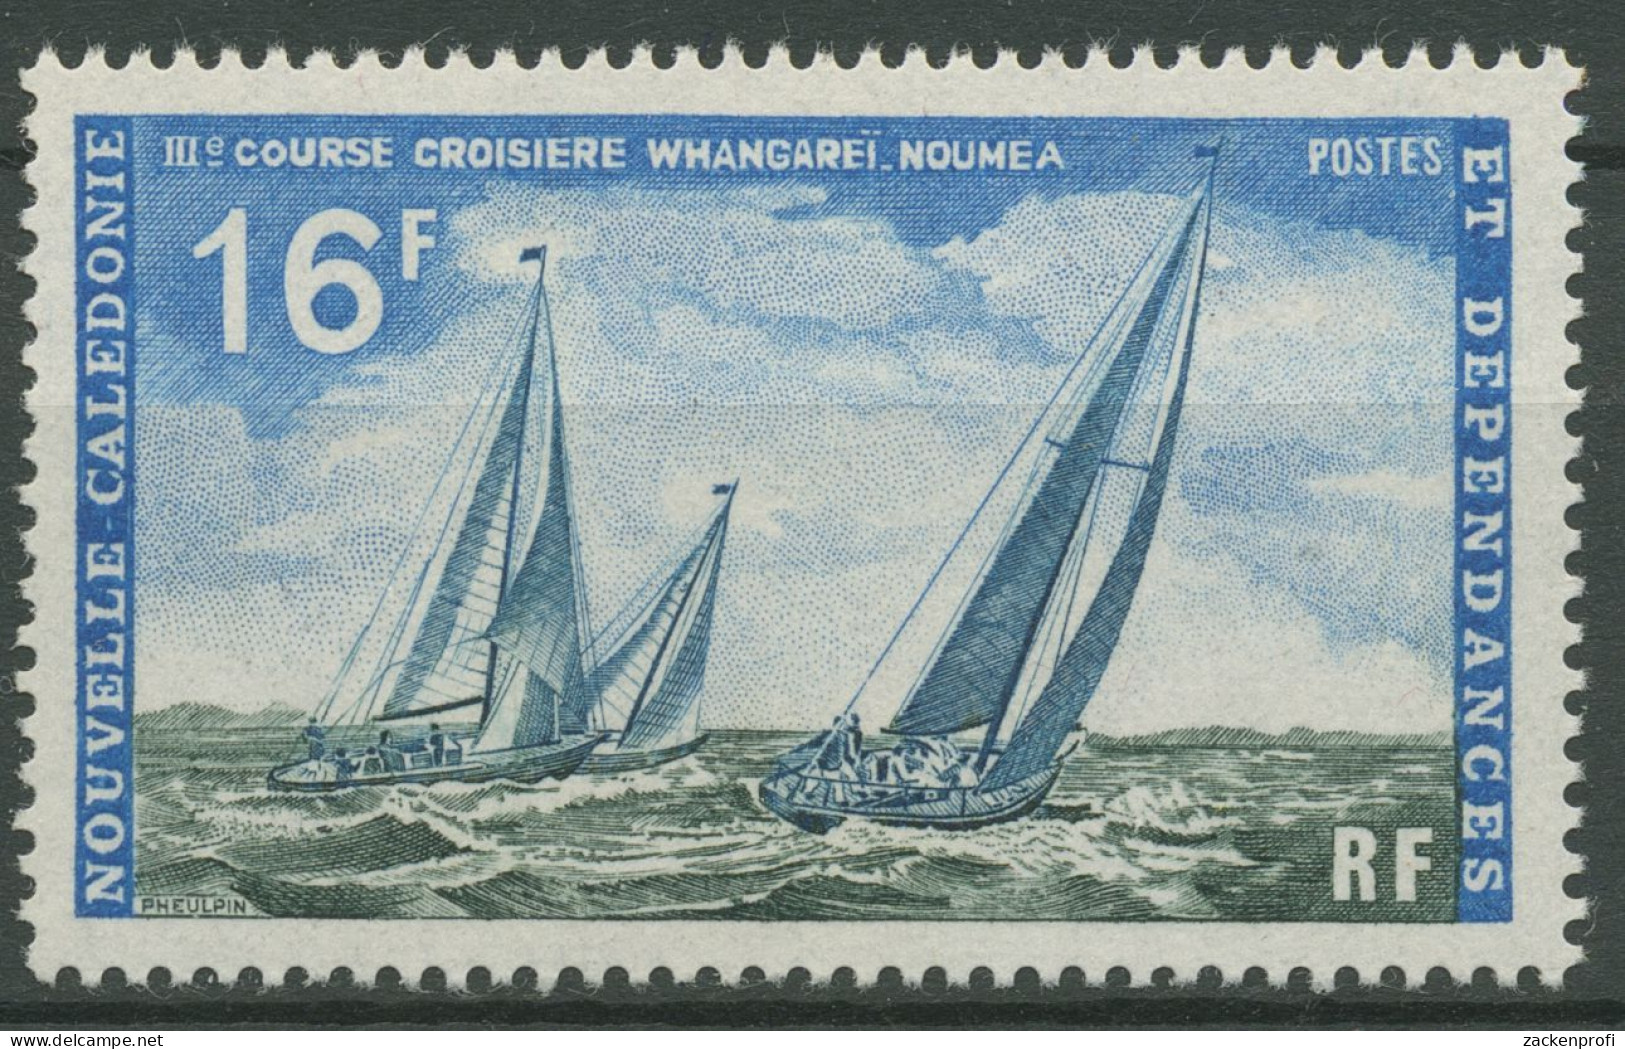 Neukaledonien 1971 Hochseeregatta Whangarei-Nouméa 500 Postfrisch - Neufs